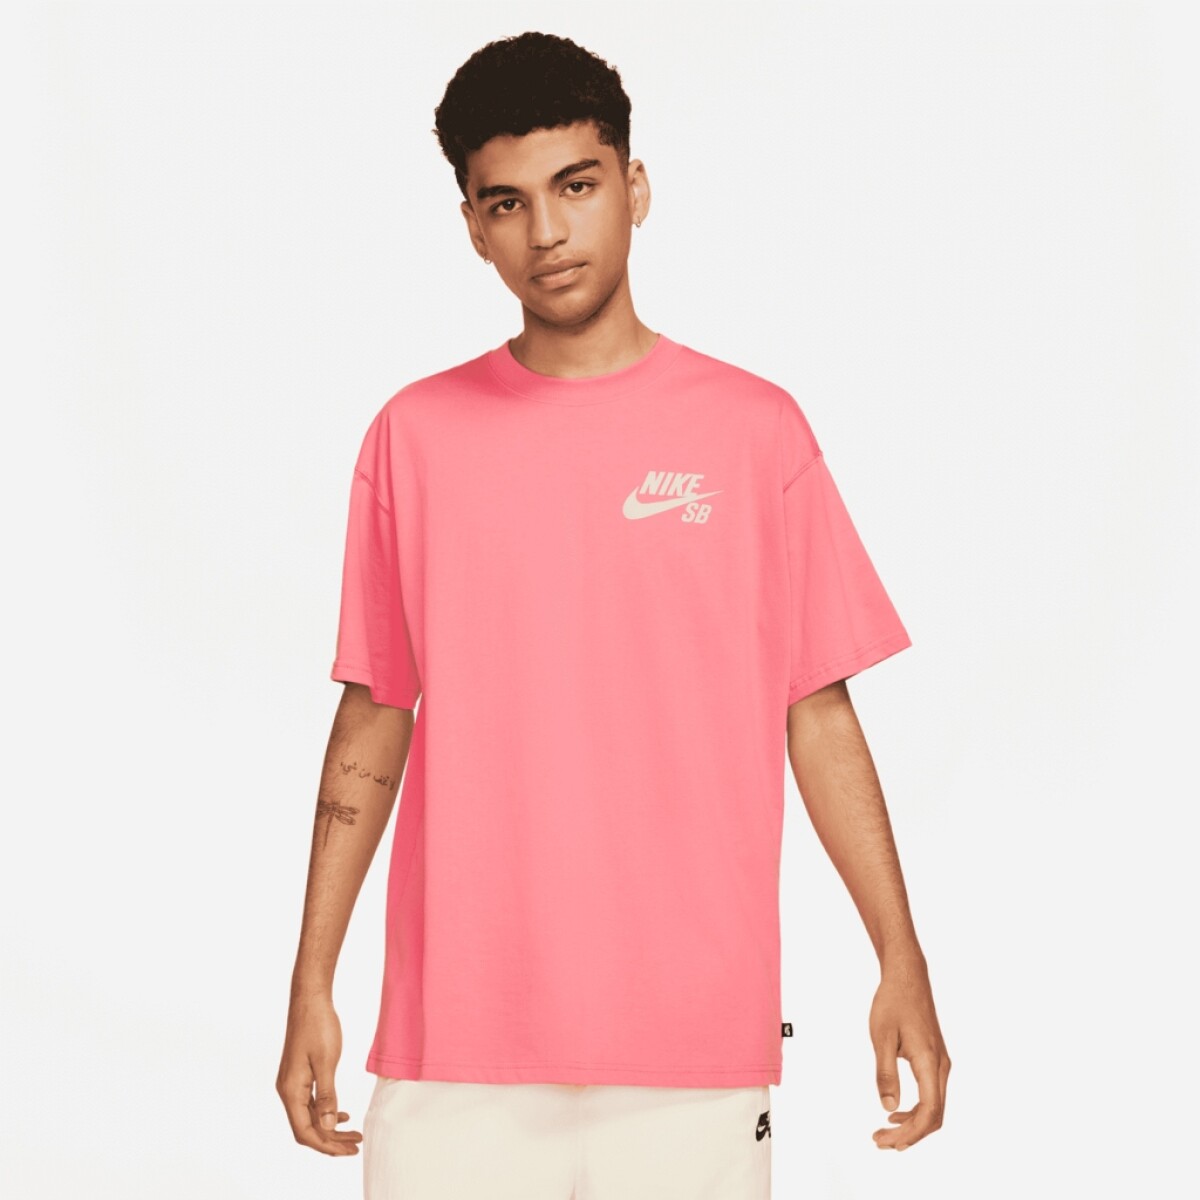 Remera Nike Moda Hombre SB Tee Logo Pink - Color Único 